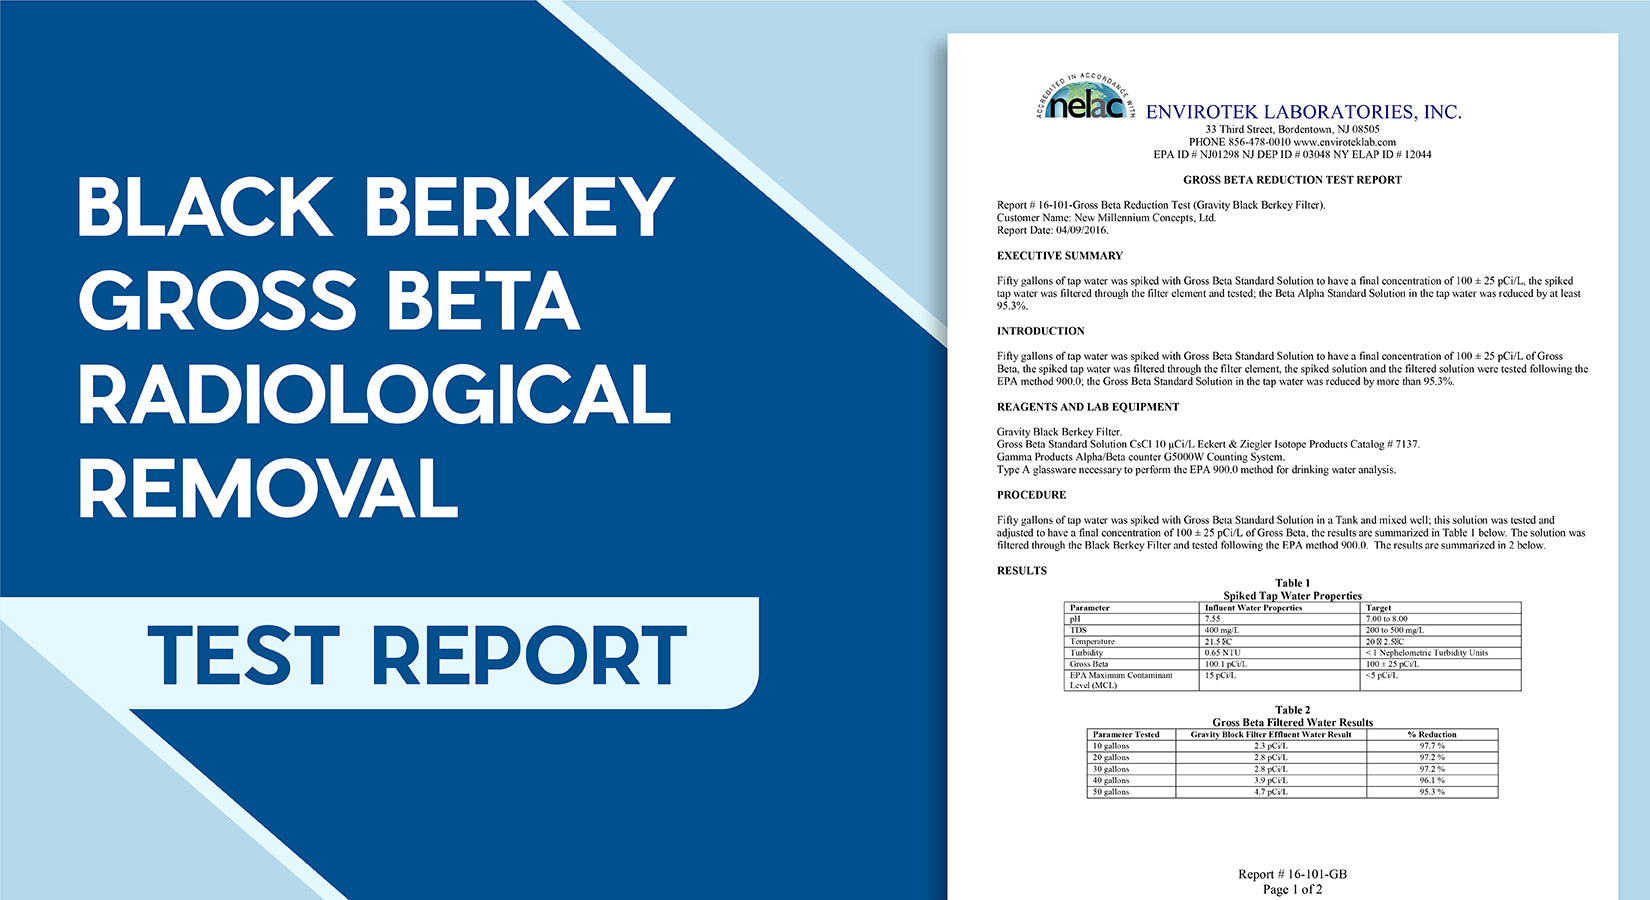 Black Berkey Gross Beta Radiological Removal Test Report